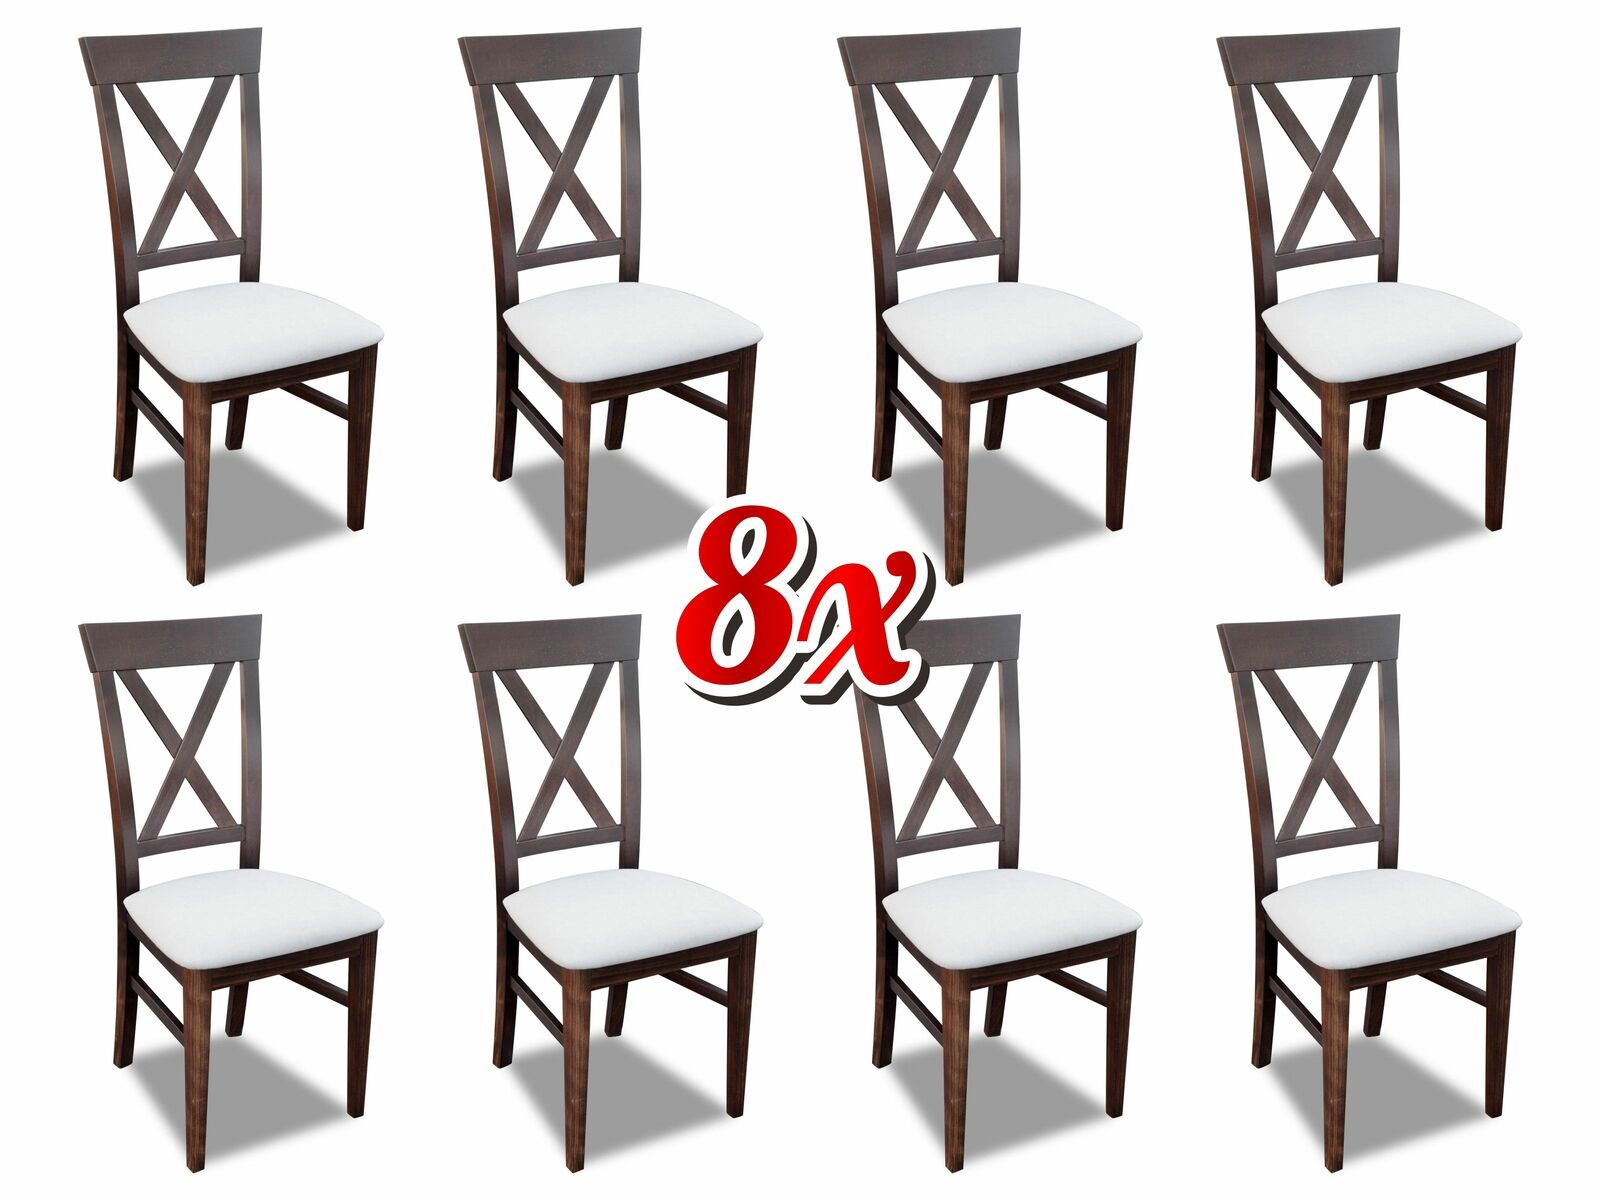 Garnitur Komplett 8x Designer Stuhl Set Esszimmer Lehn Polster Sitz Stühle Neu